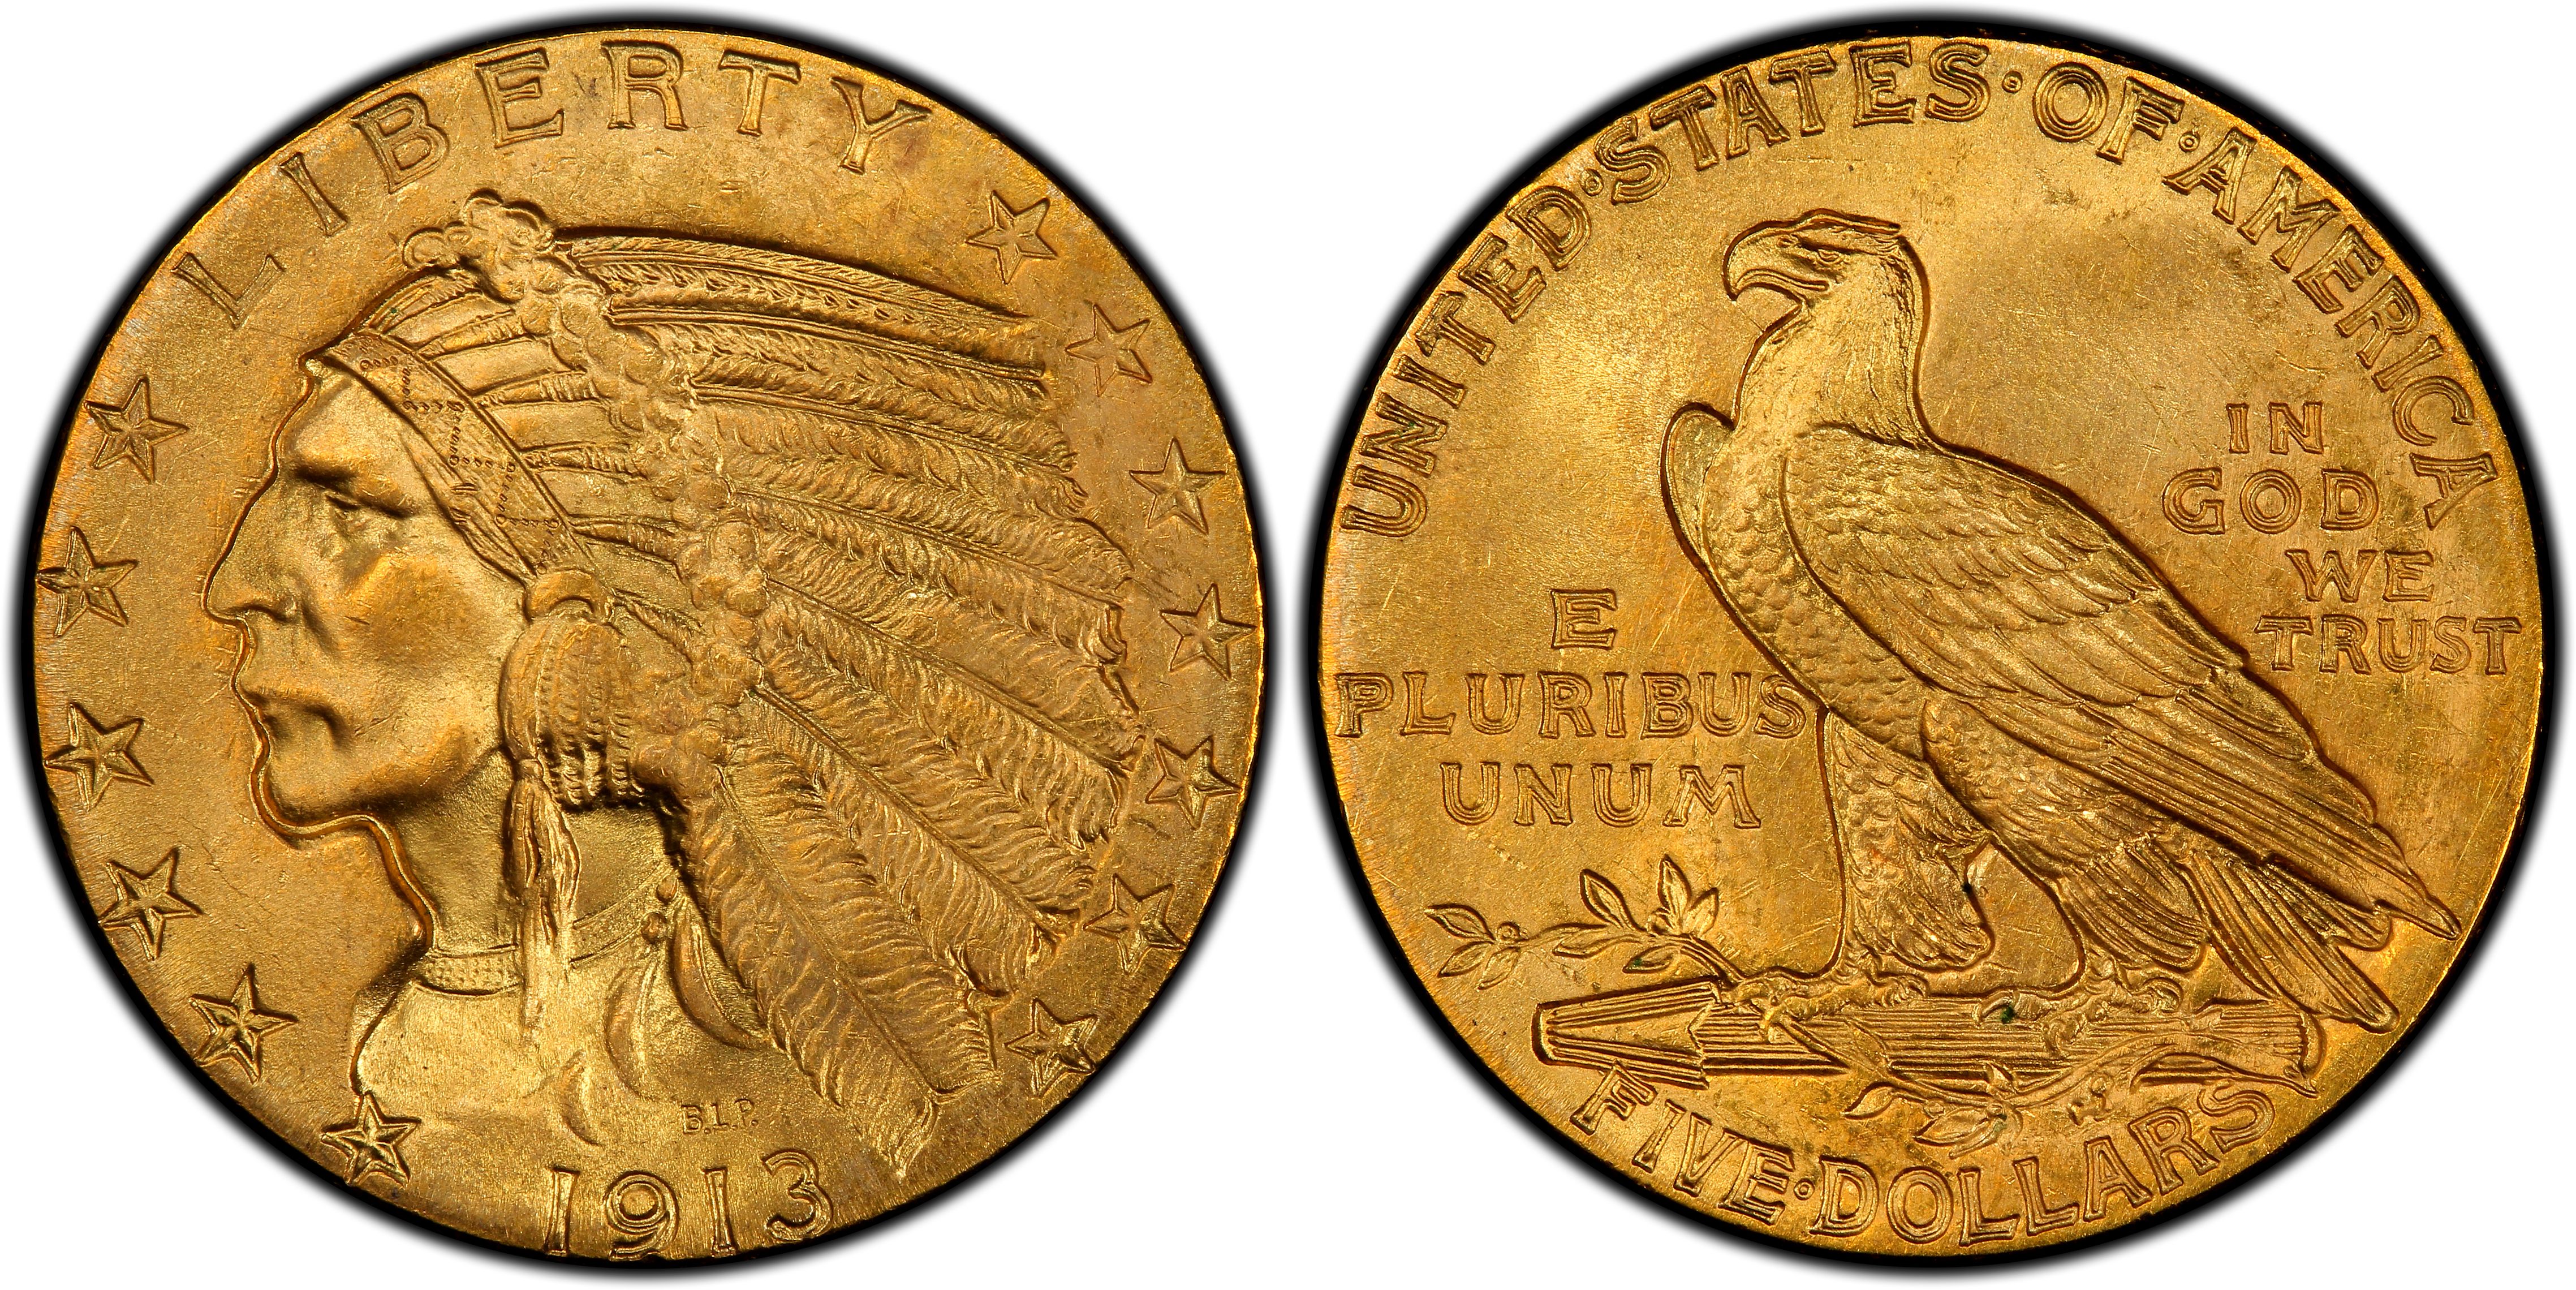 1913 5 dollar gold coin value